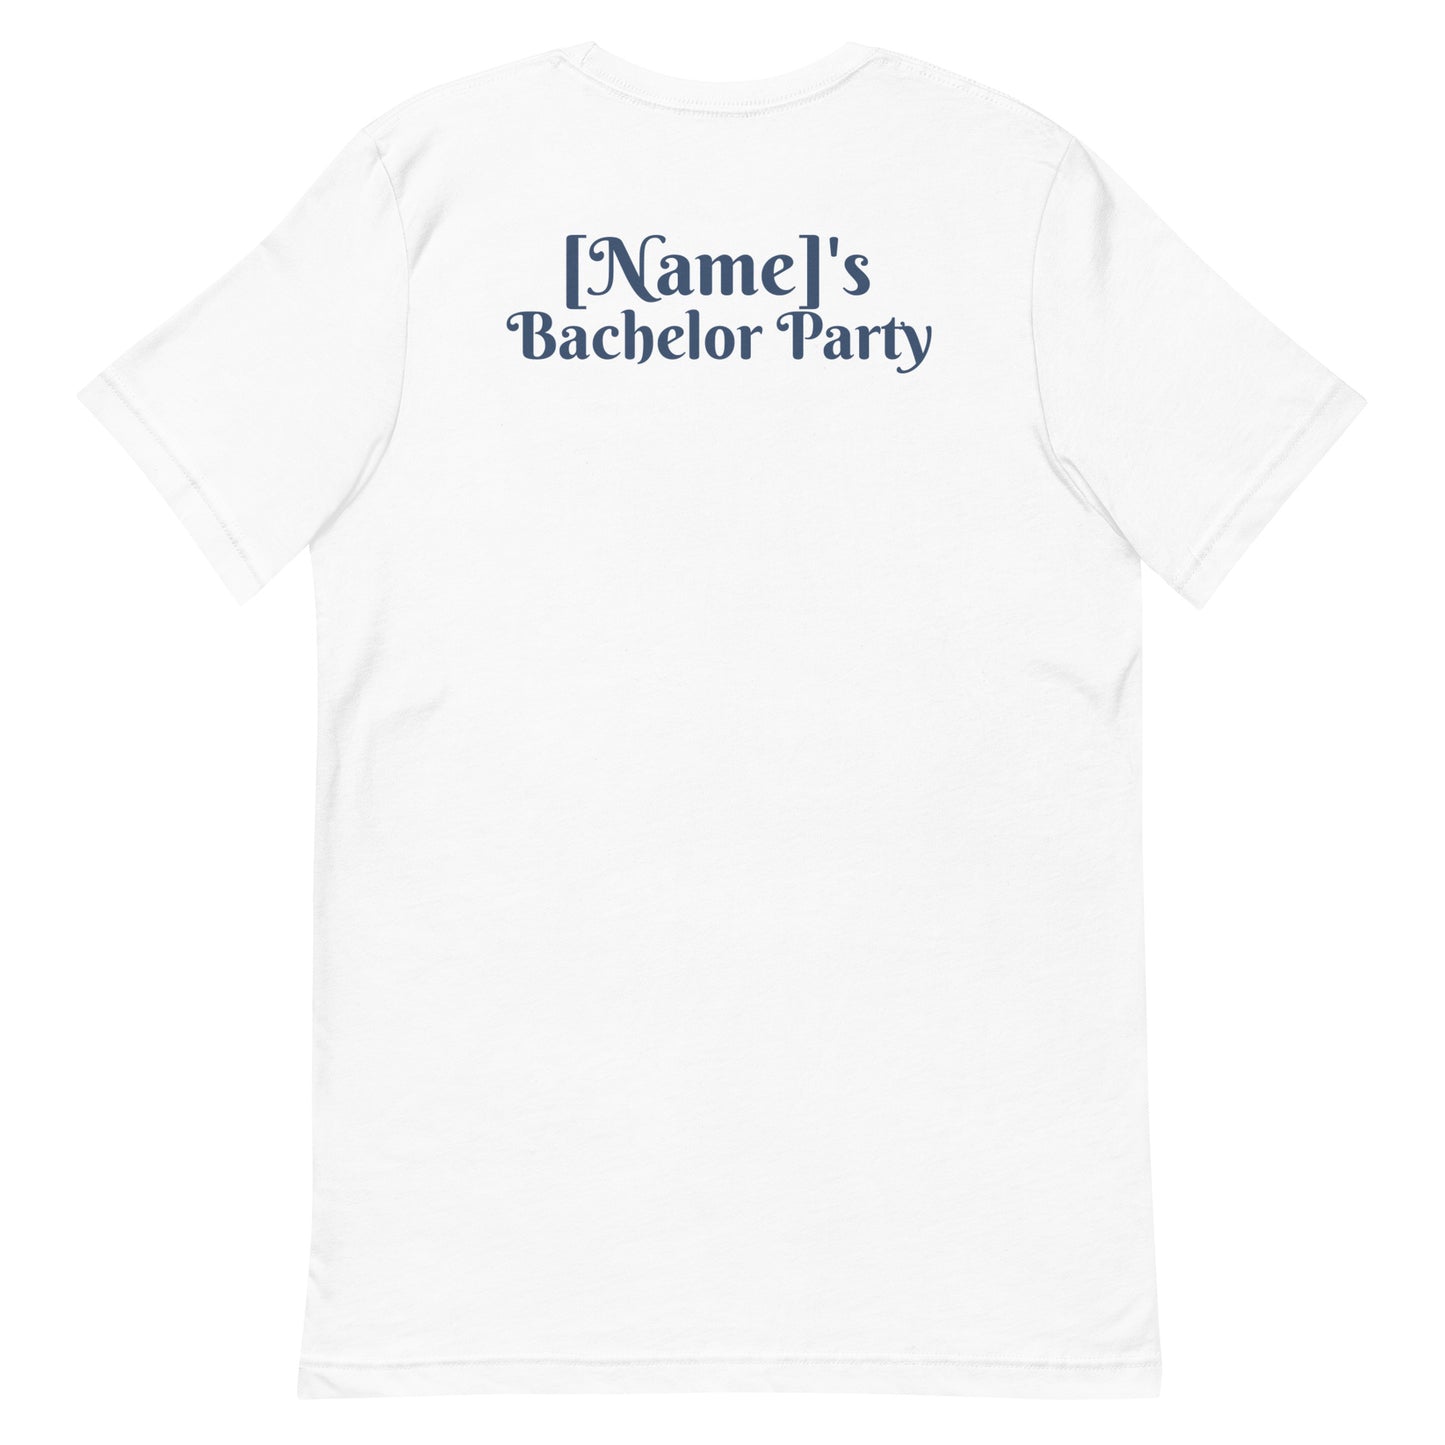 Bachelor Party t-shirt